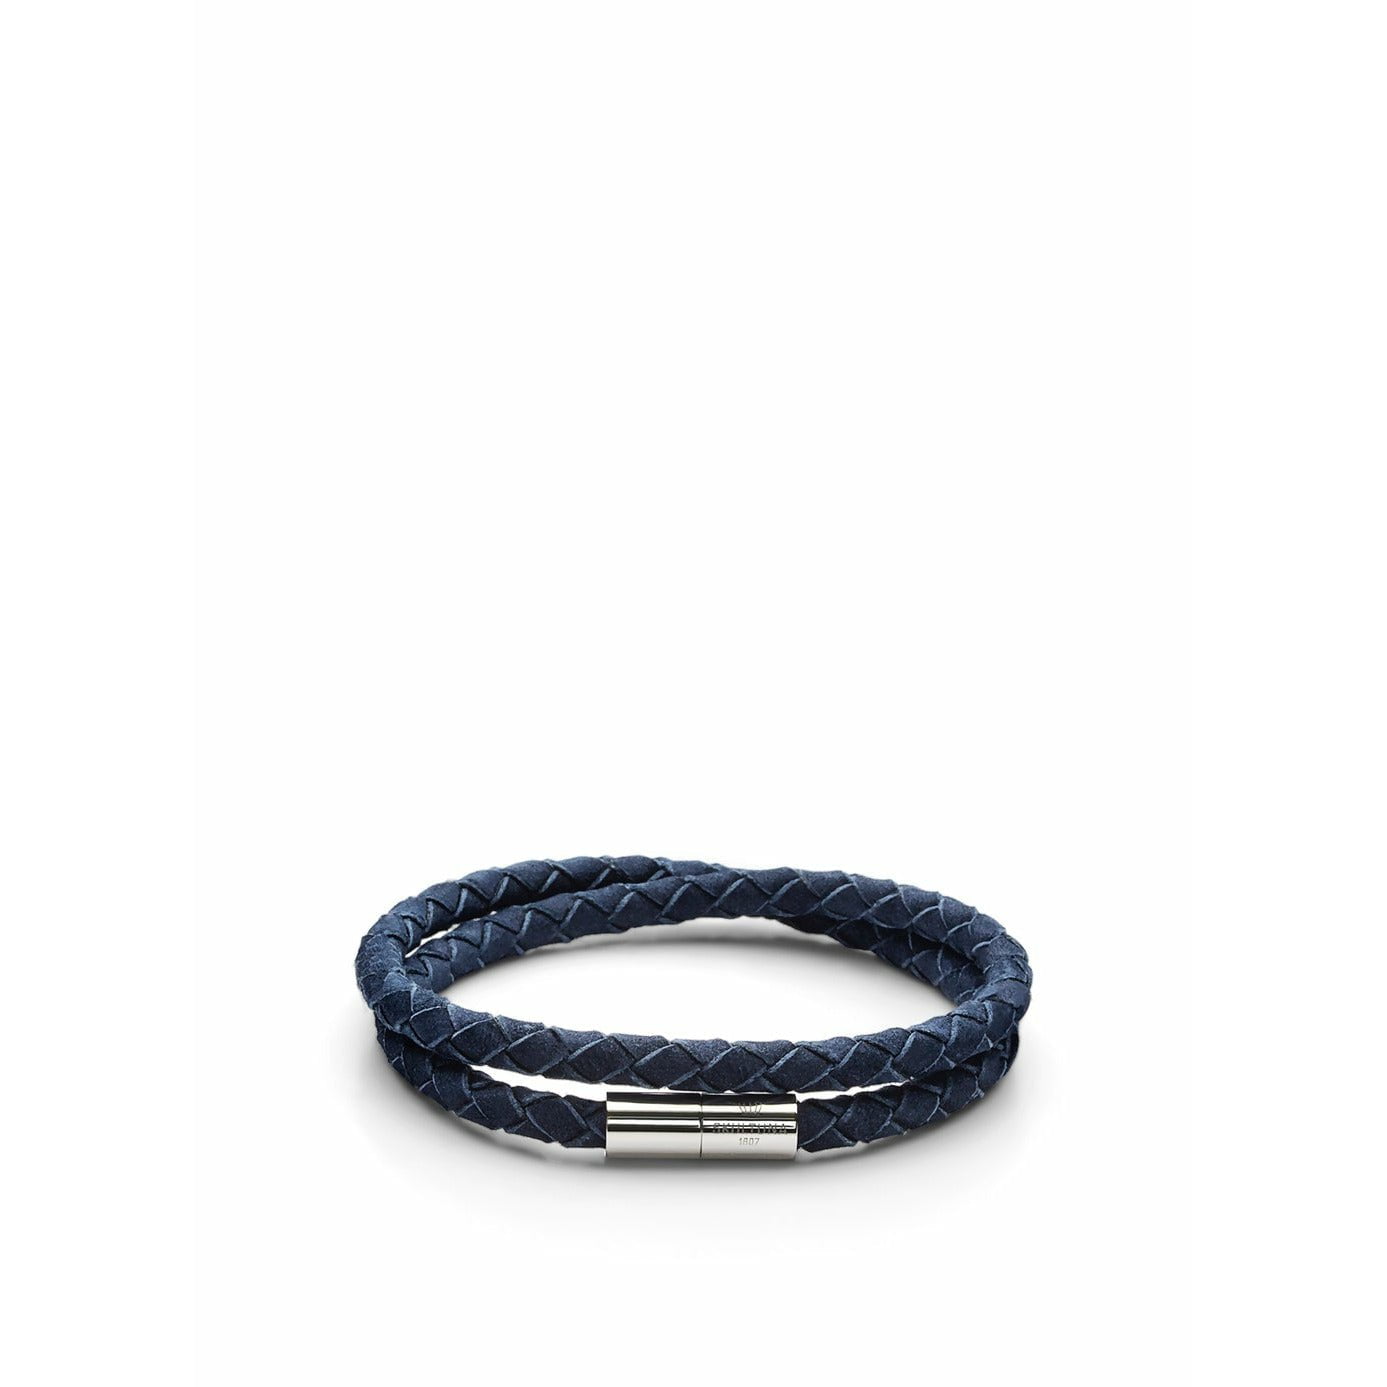 Skultuna De suede armband groot Ø18,5 cm, blauw